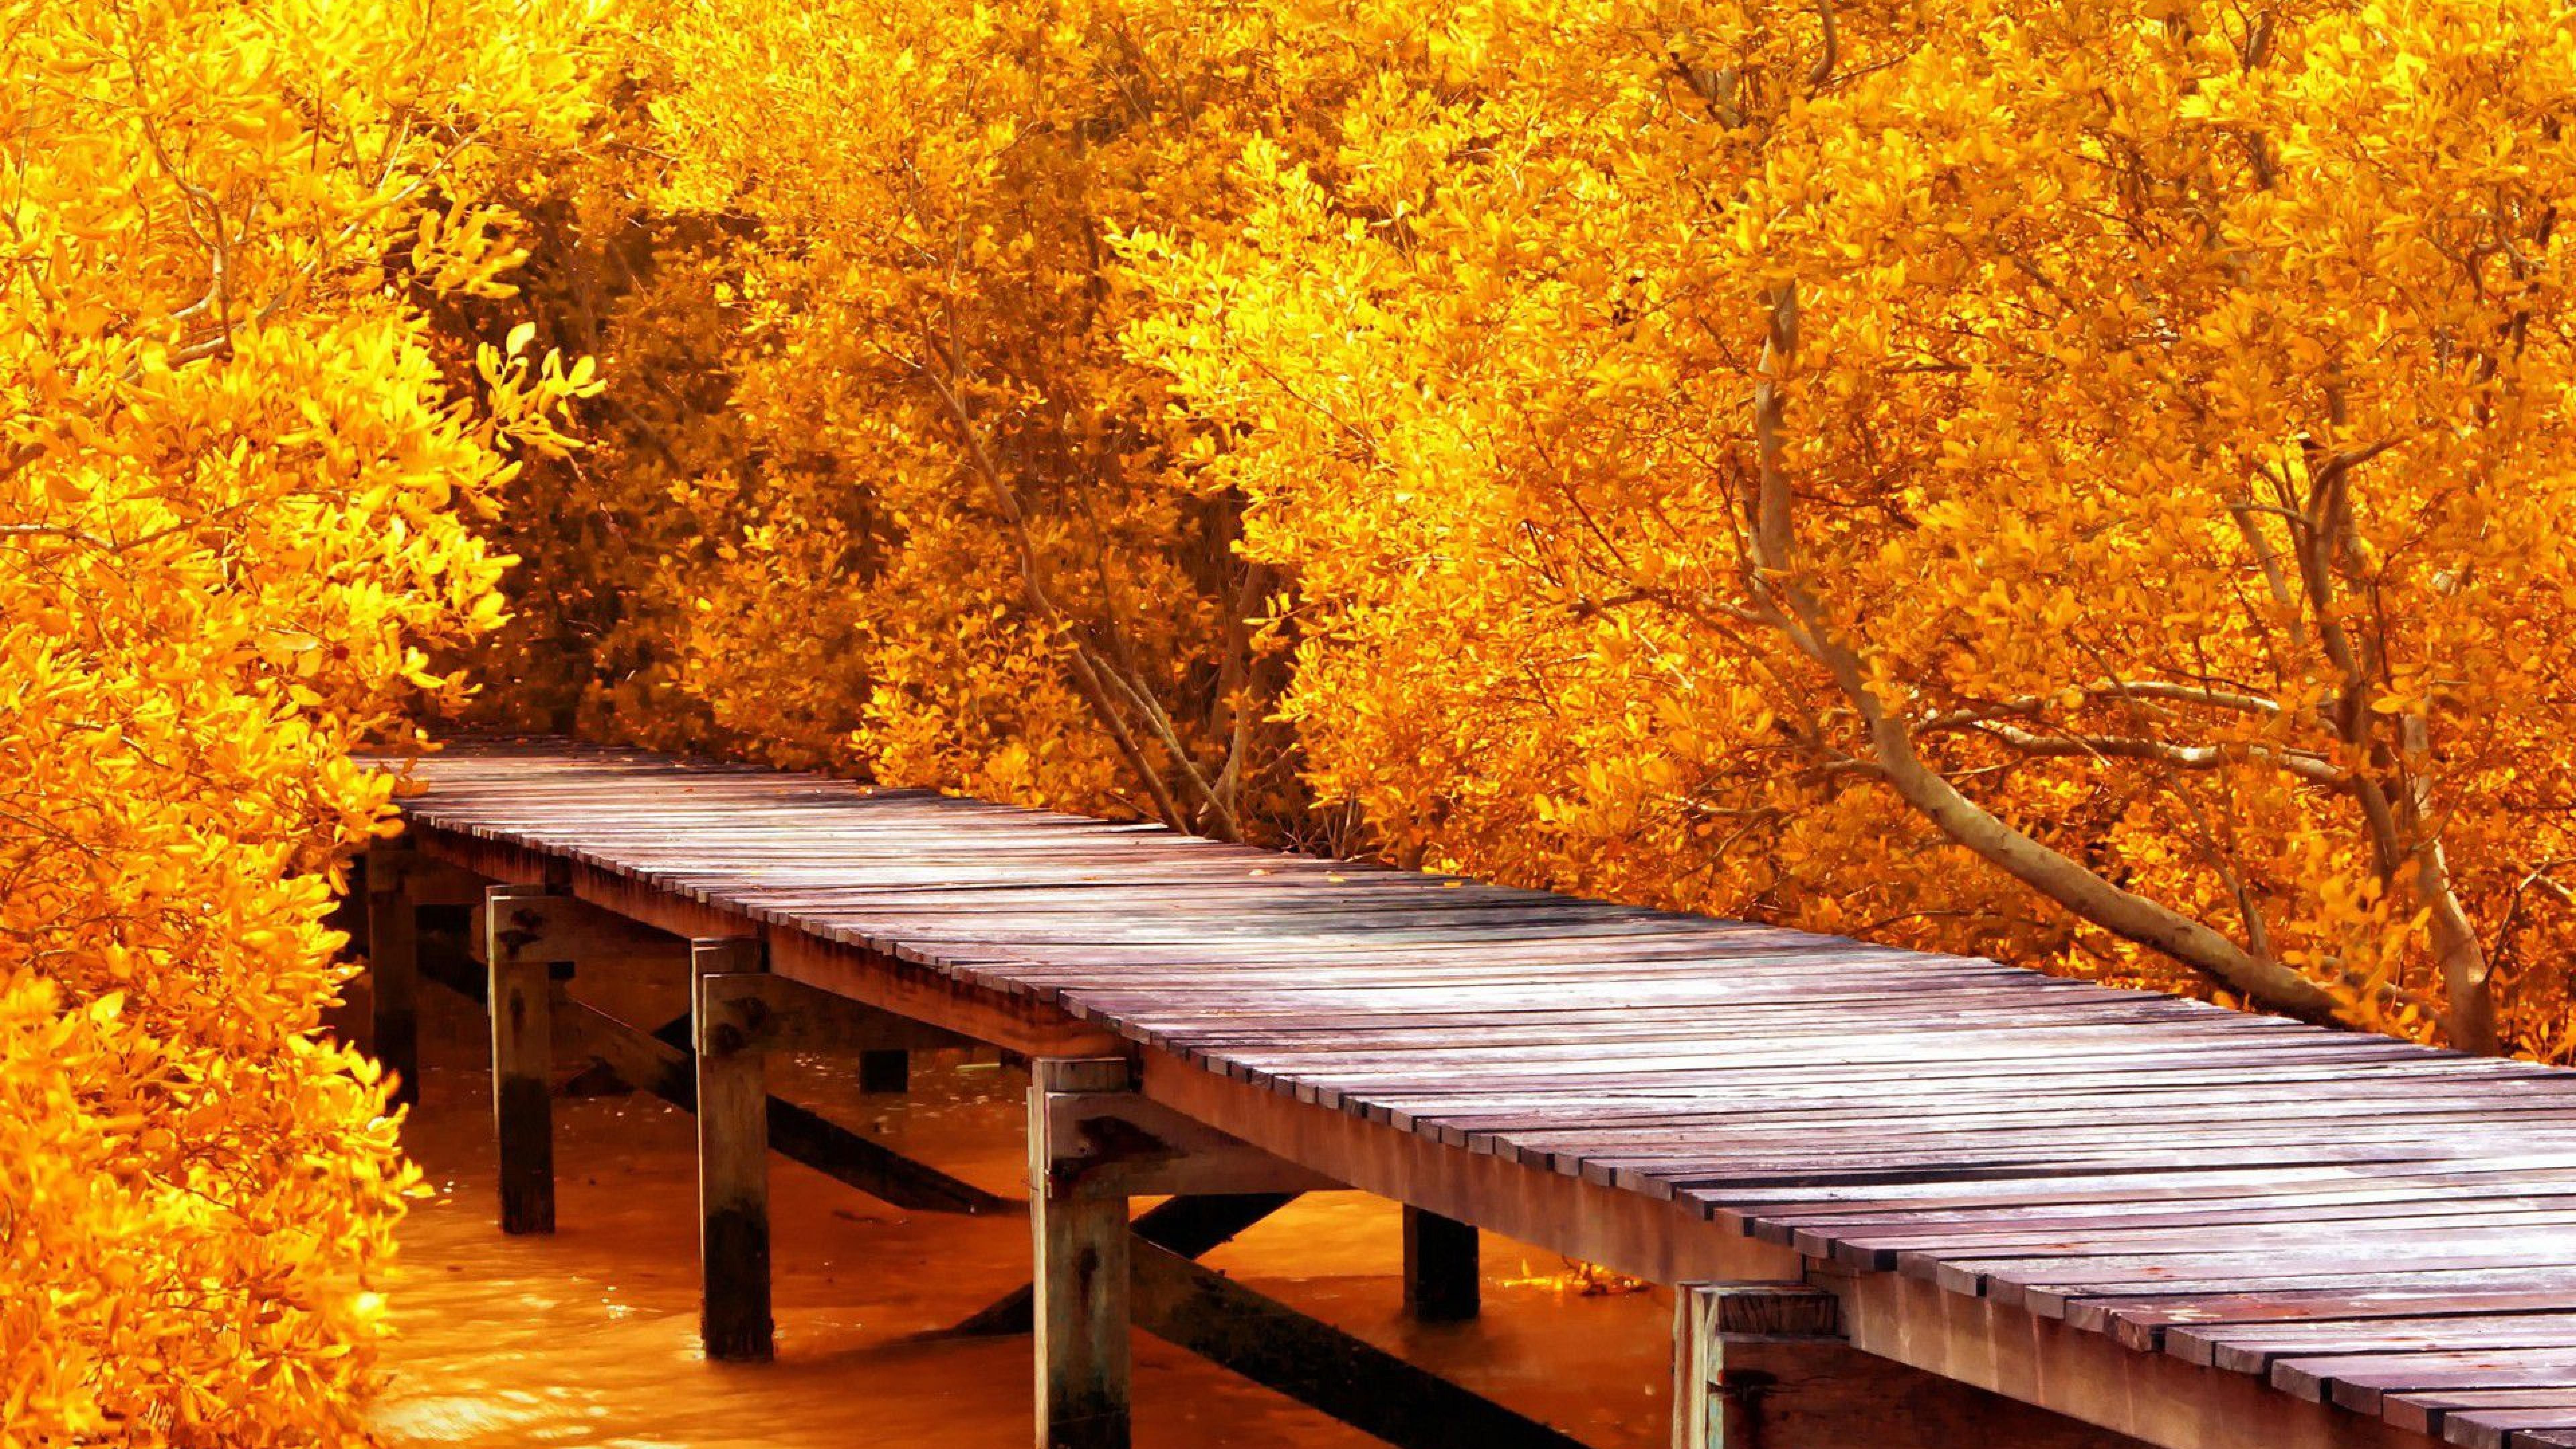 Ultra HD Wallpaper 8k 7680x4320 Nature Group (31 ), Download for free. Bridge wallpaper, Autumn trees, Yellow tree